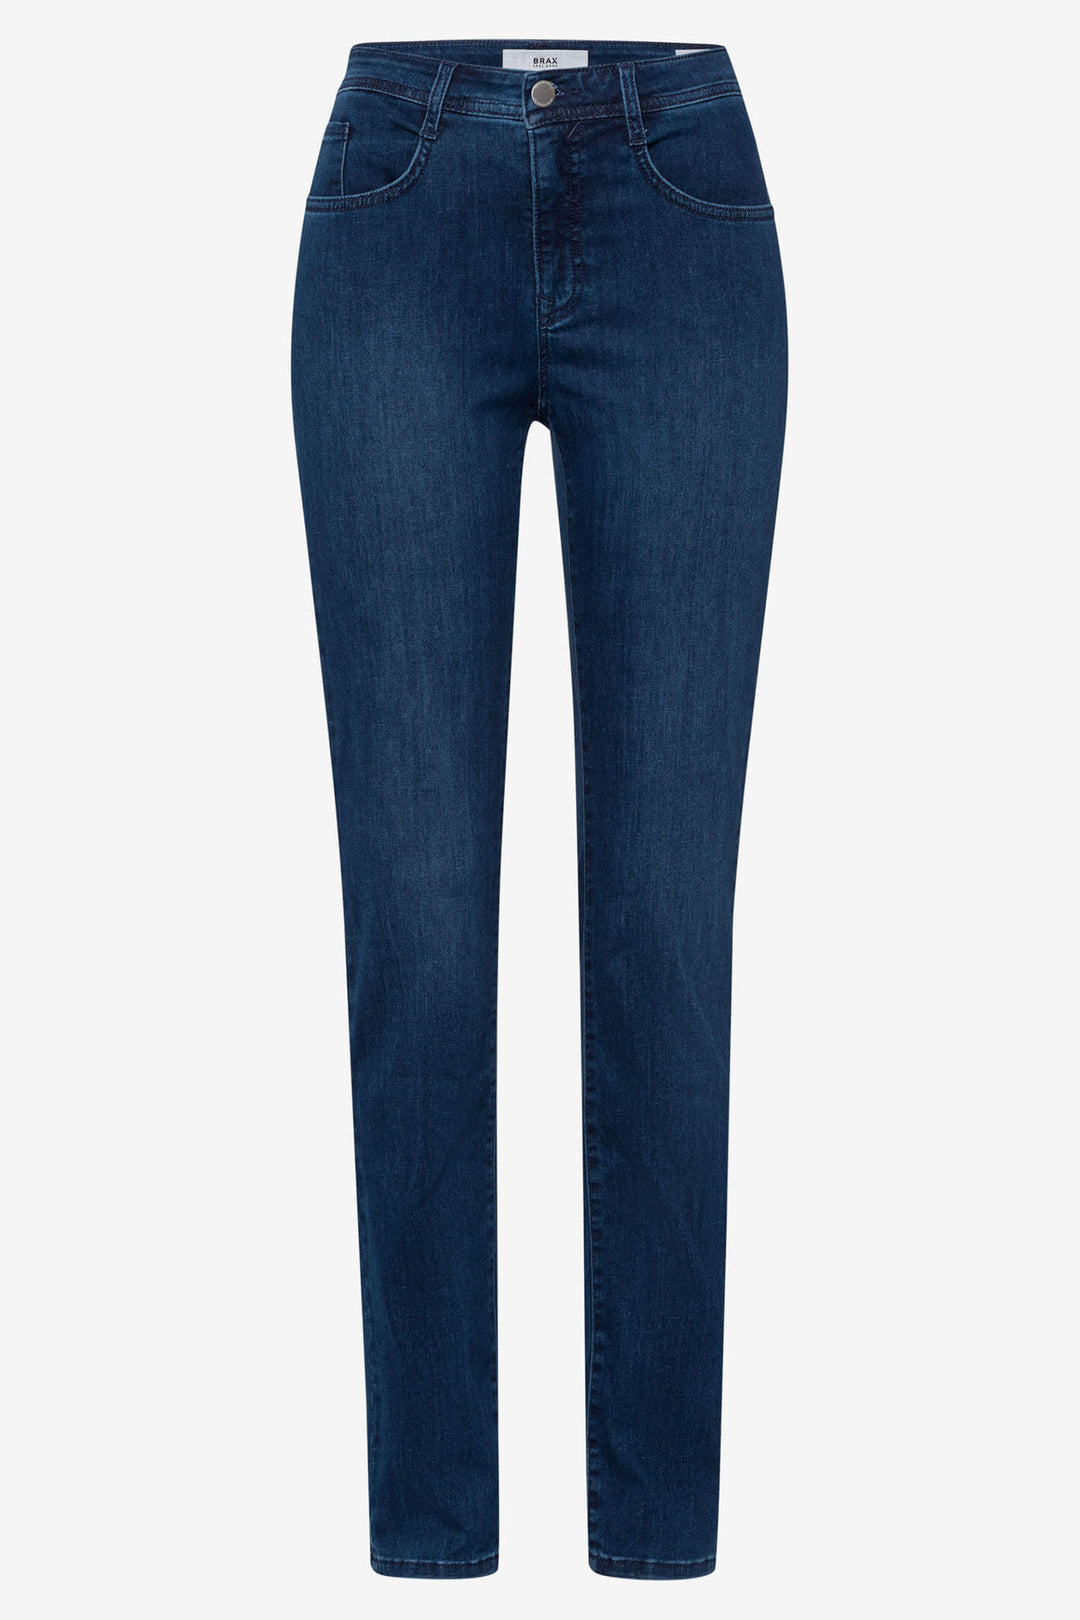 Brax Mary 707000 09928820 25 Used Regular Blue Five Pocket Jeans - Olivia Grace Fashion